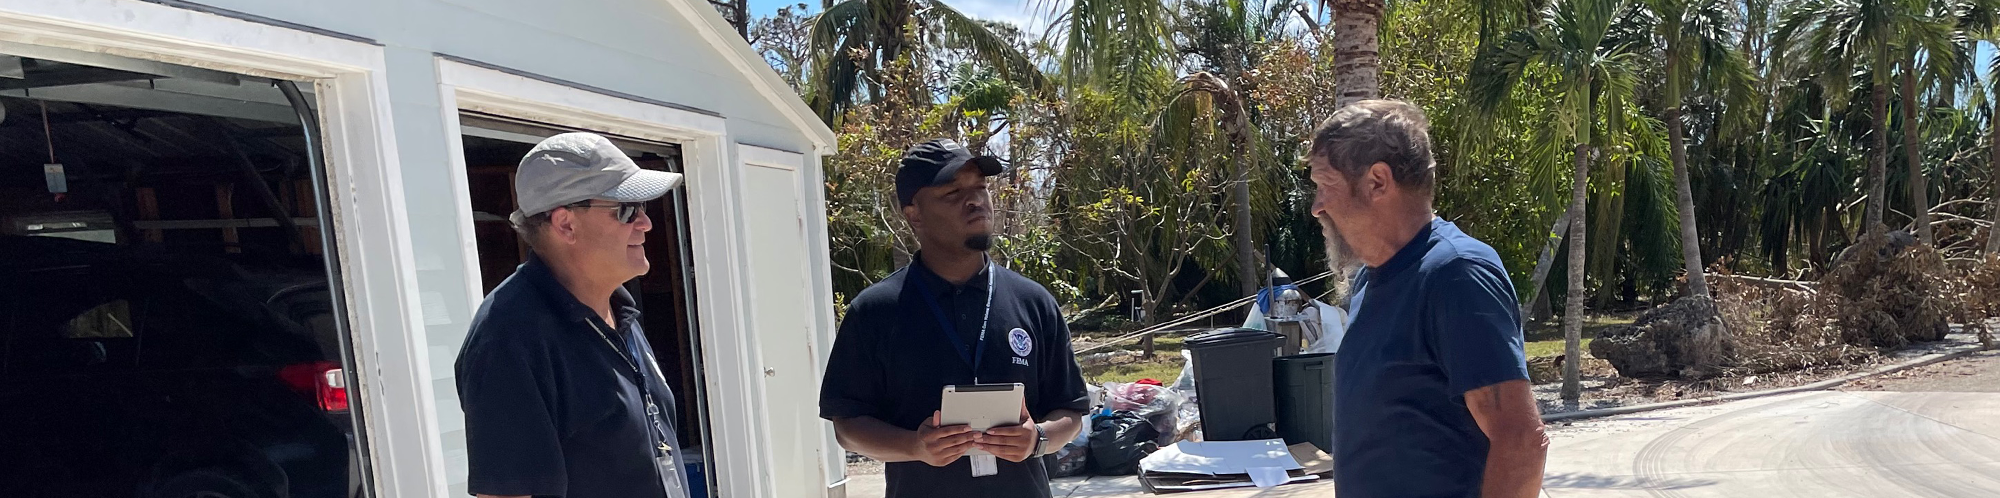 FEMA personnel talk to a disaster survivor